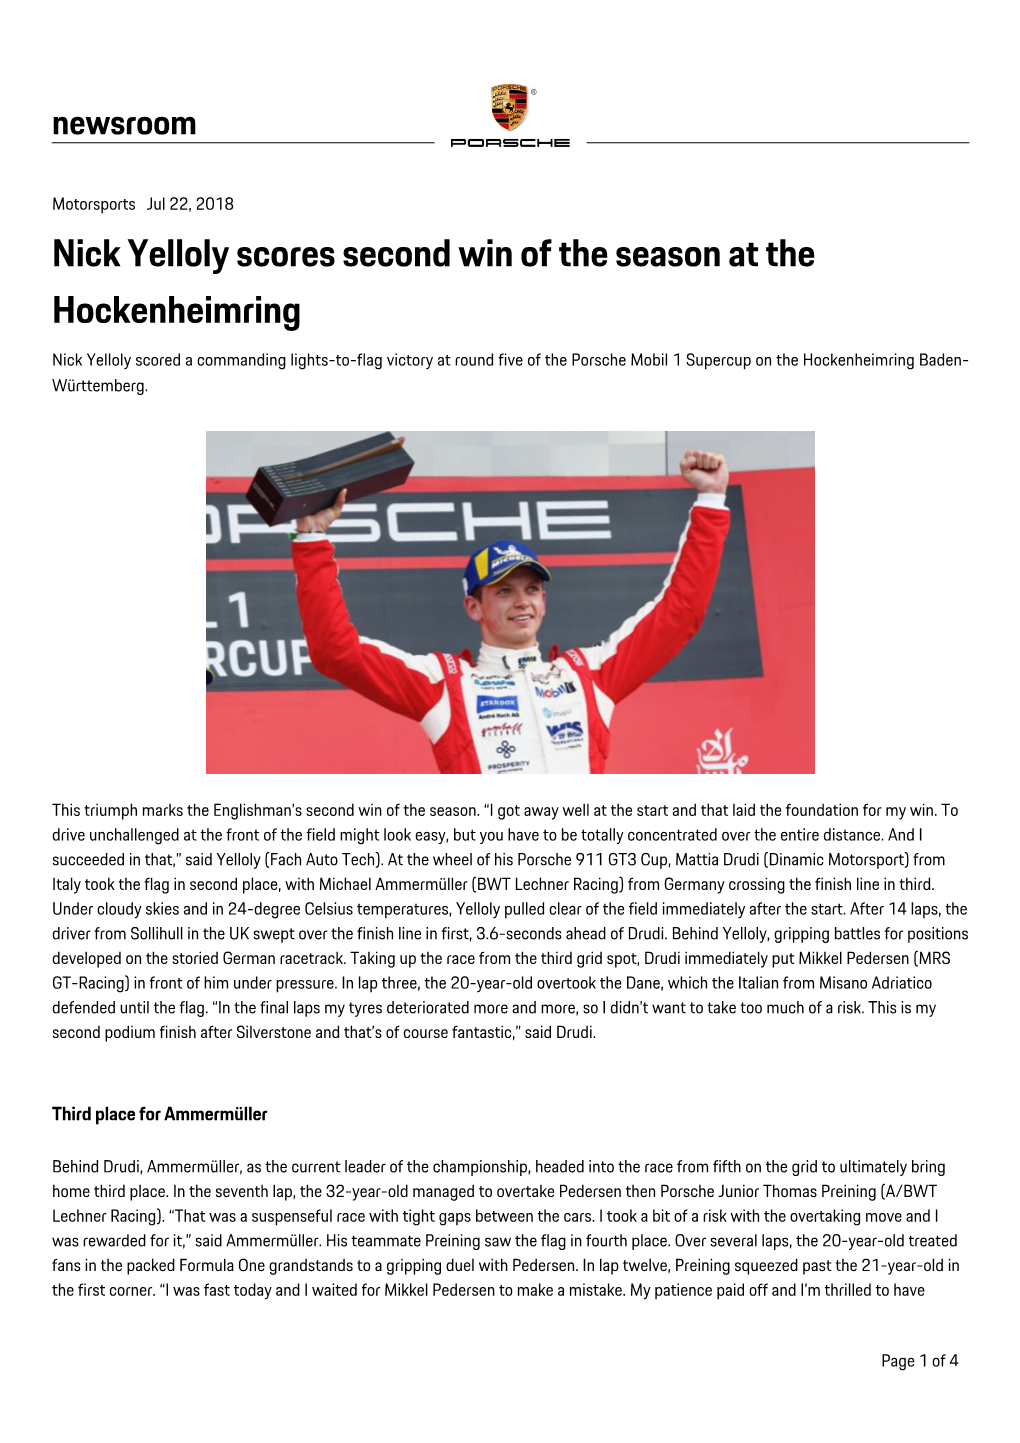 Nick Yelloly Scores Second Win of the Season at the Hockenheimring